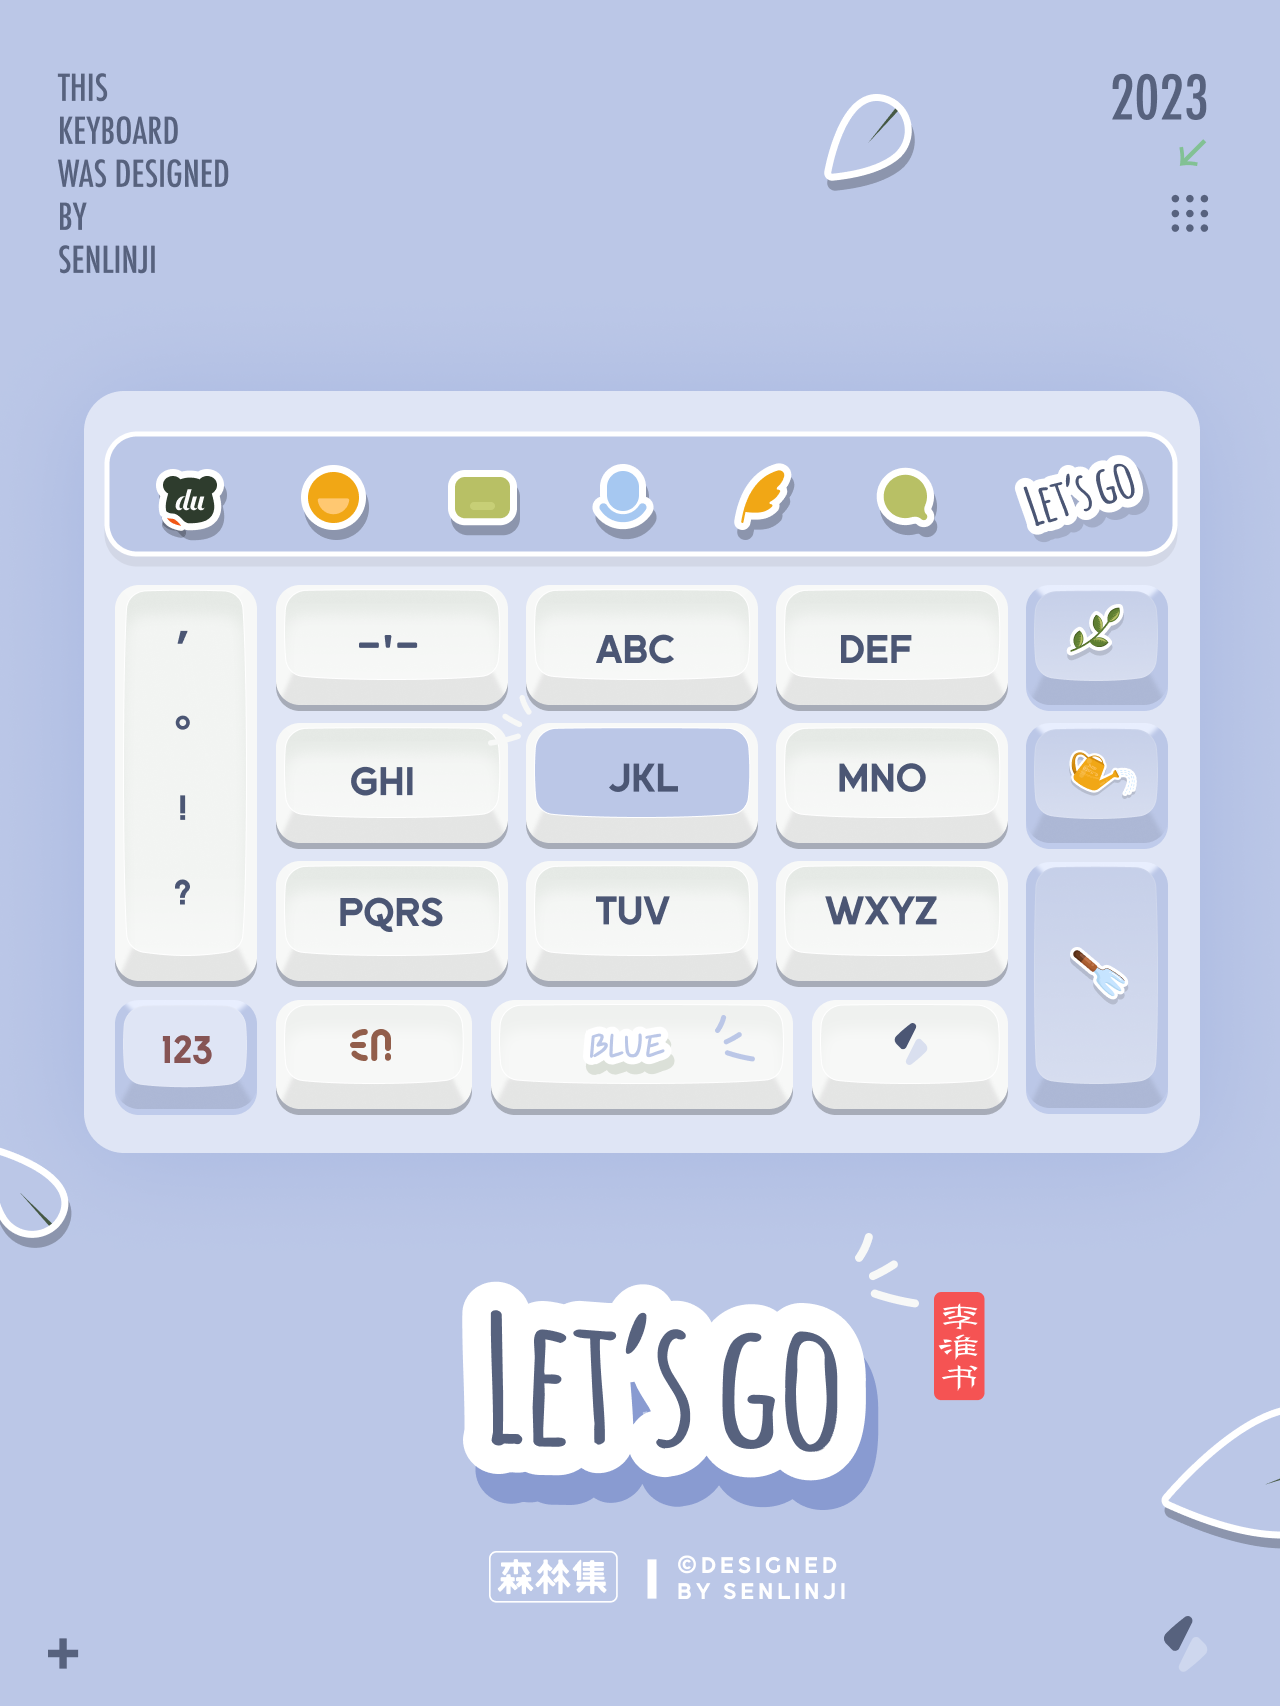 「Let's Go」极简贴纸机械键盘，春意盎然，前程可期。